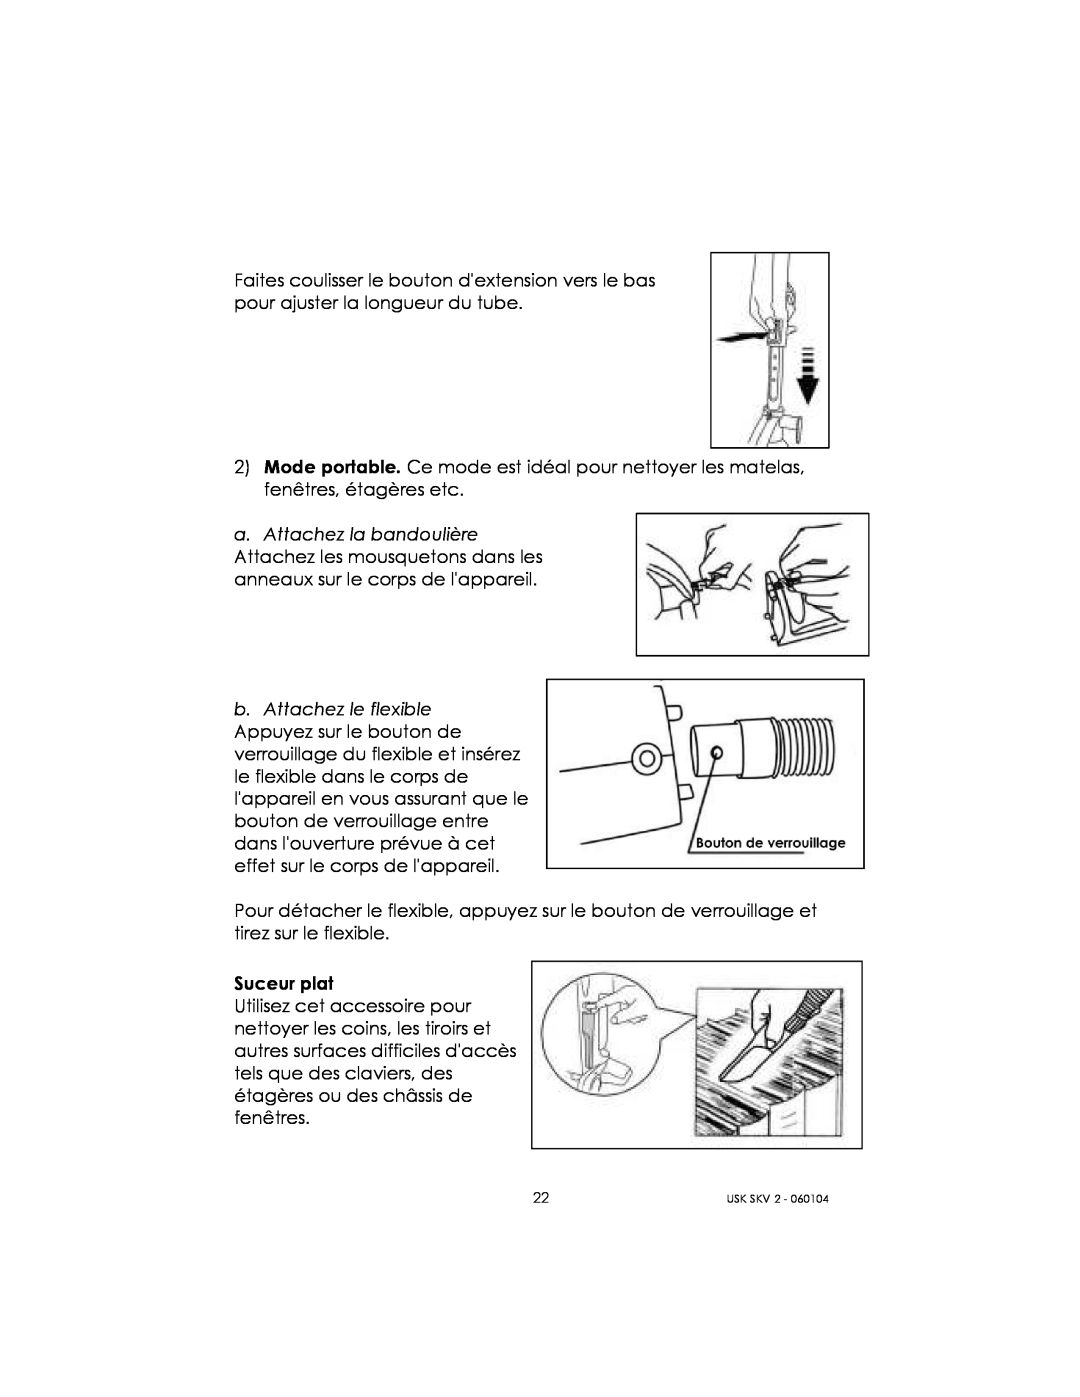 Kalorik USK SKV 2 manual b.Attachez le flexible 